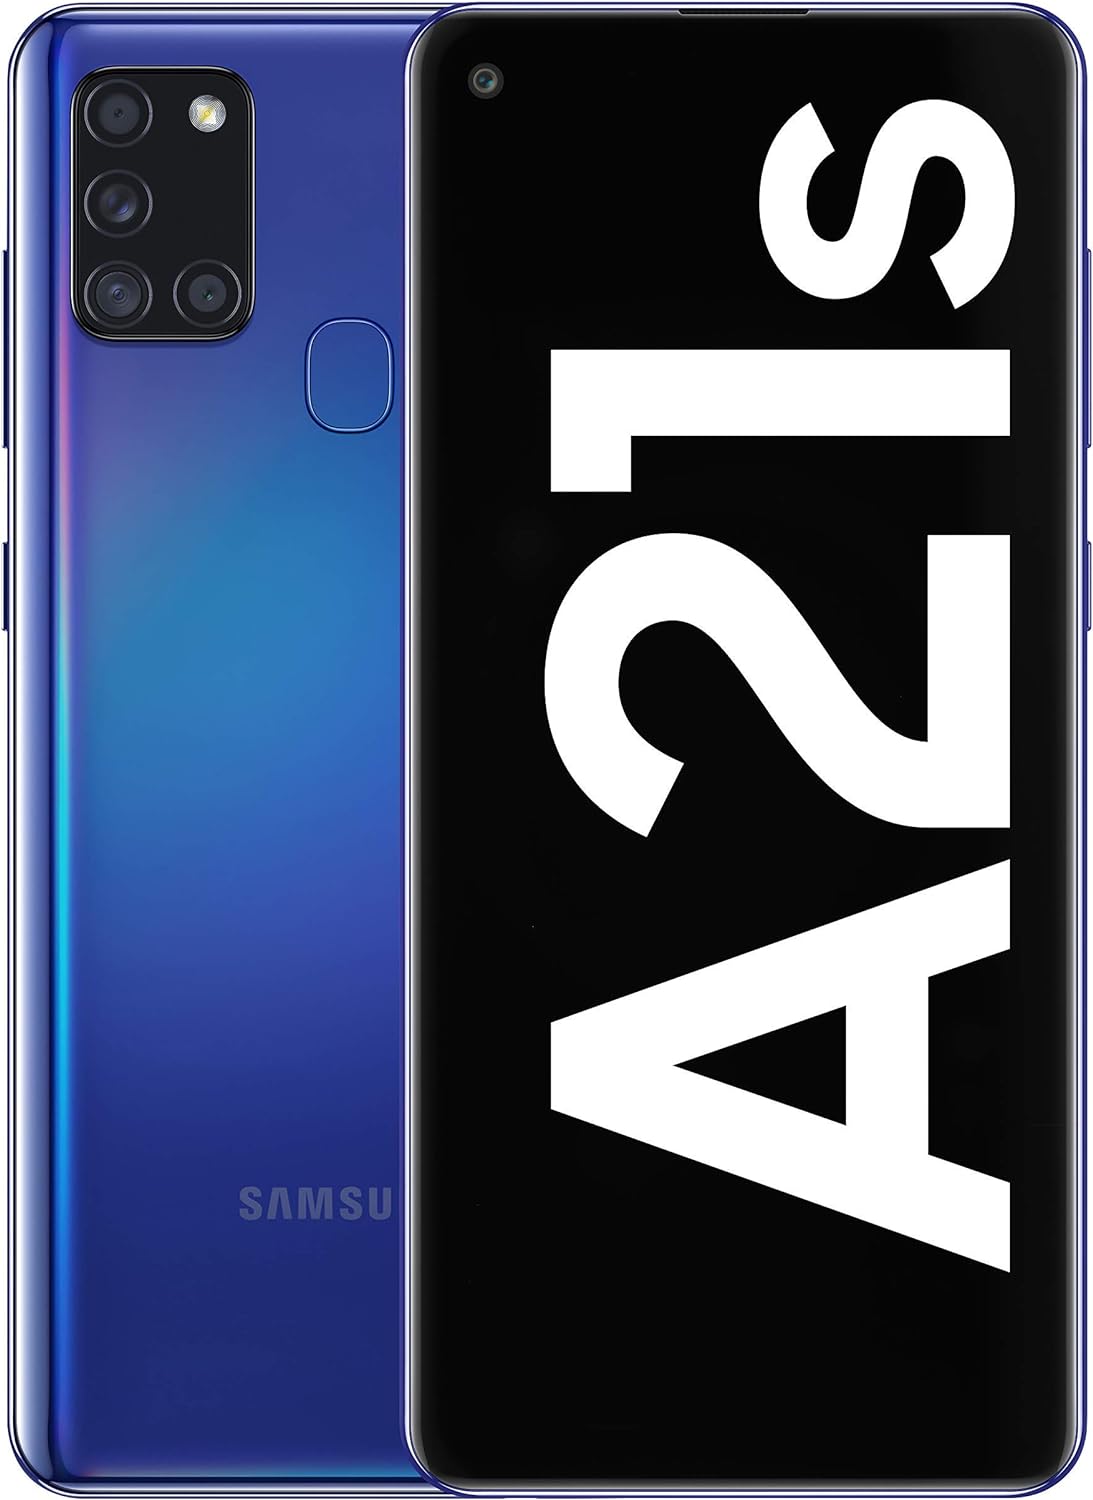 Samsung Galaxy A21s Smartphone - 32GB - Blue - Refurbished Good